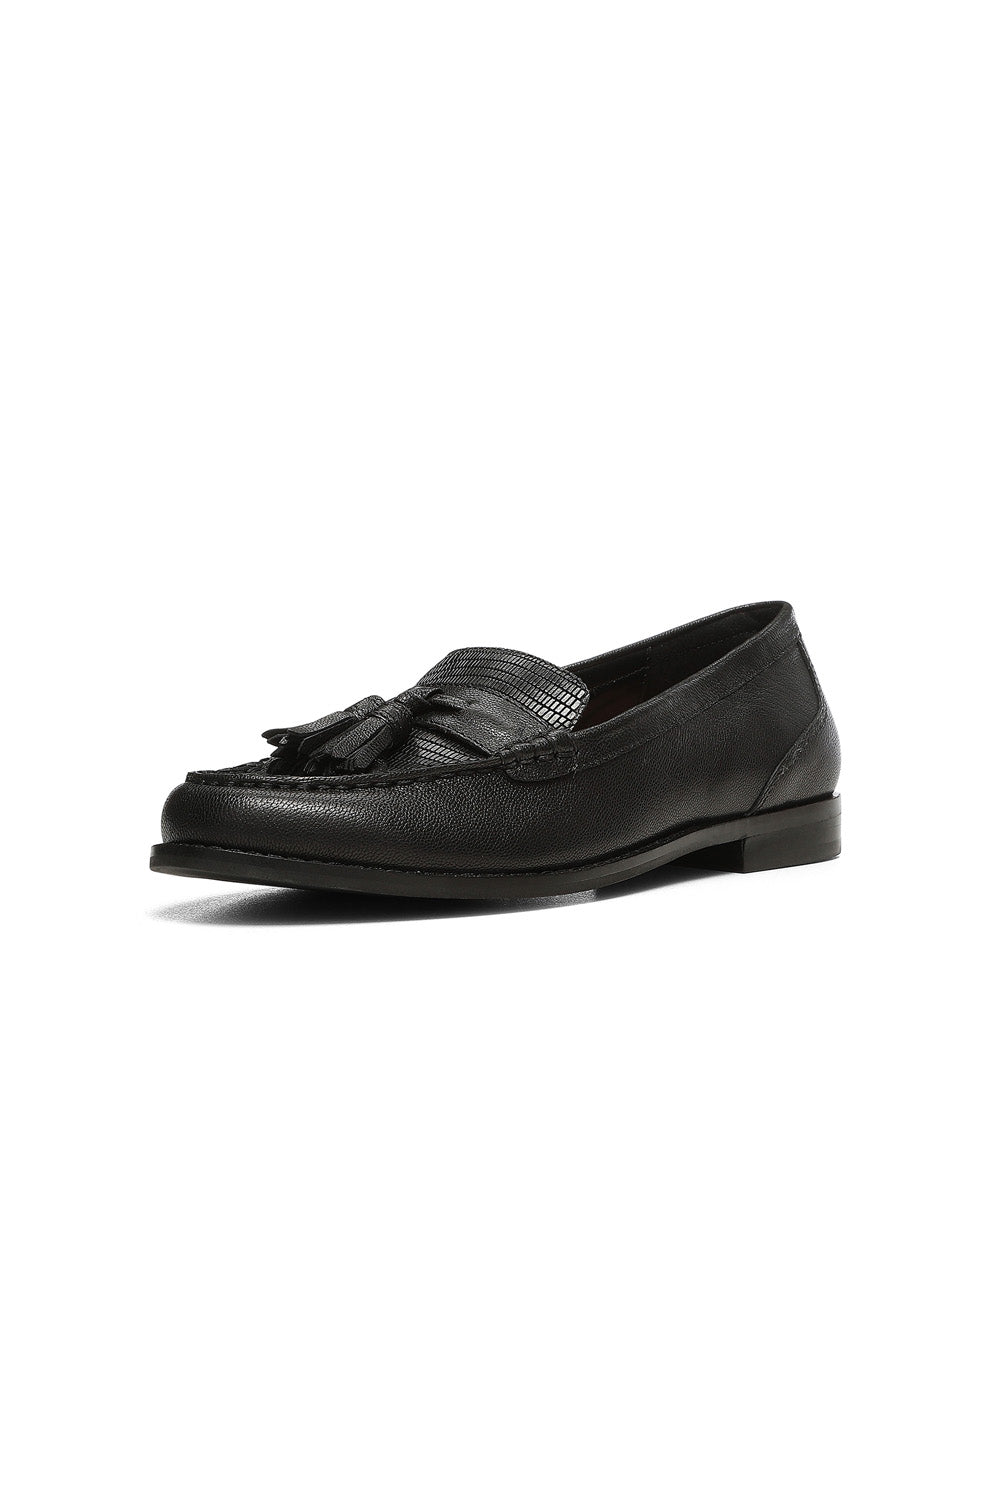 NYDJ Ariel Loafers In Leather - Black